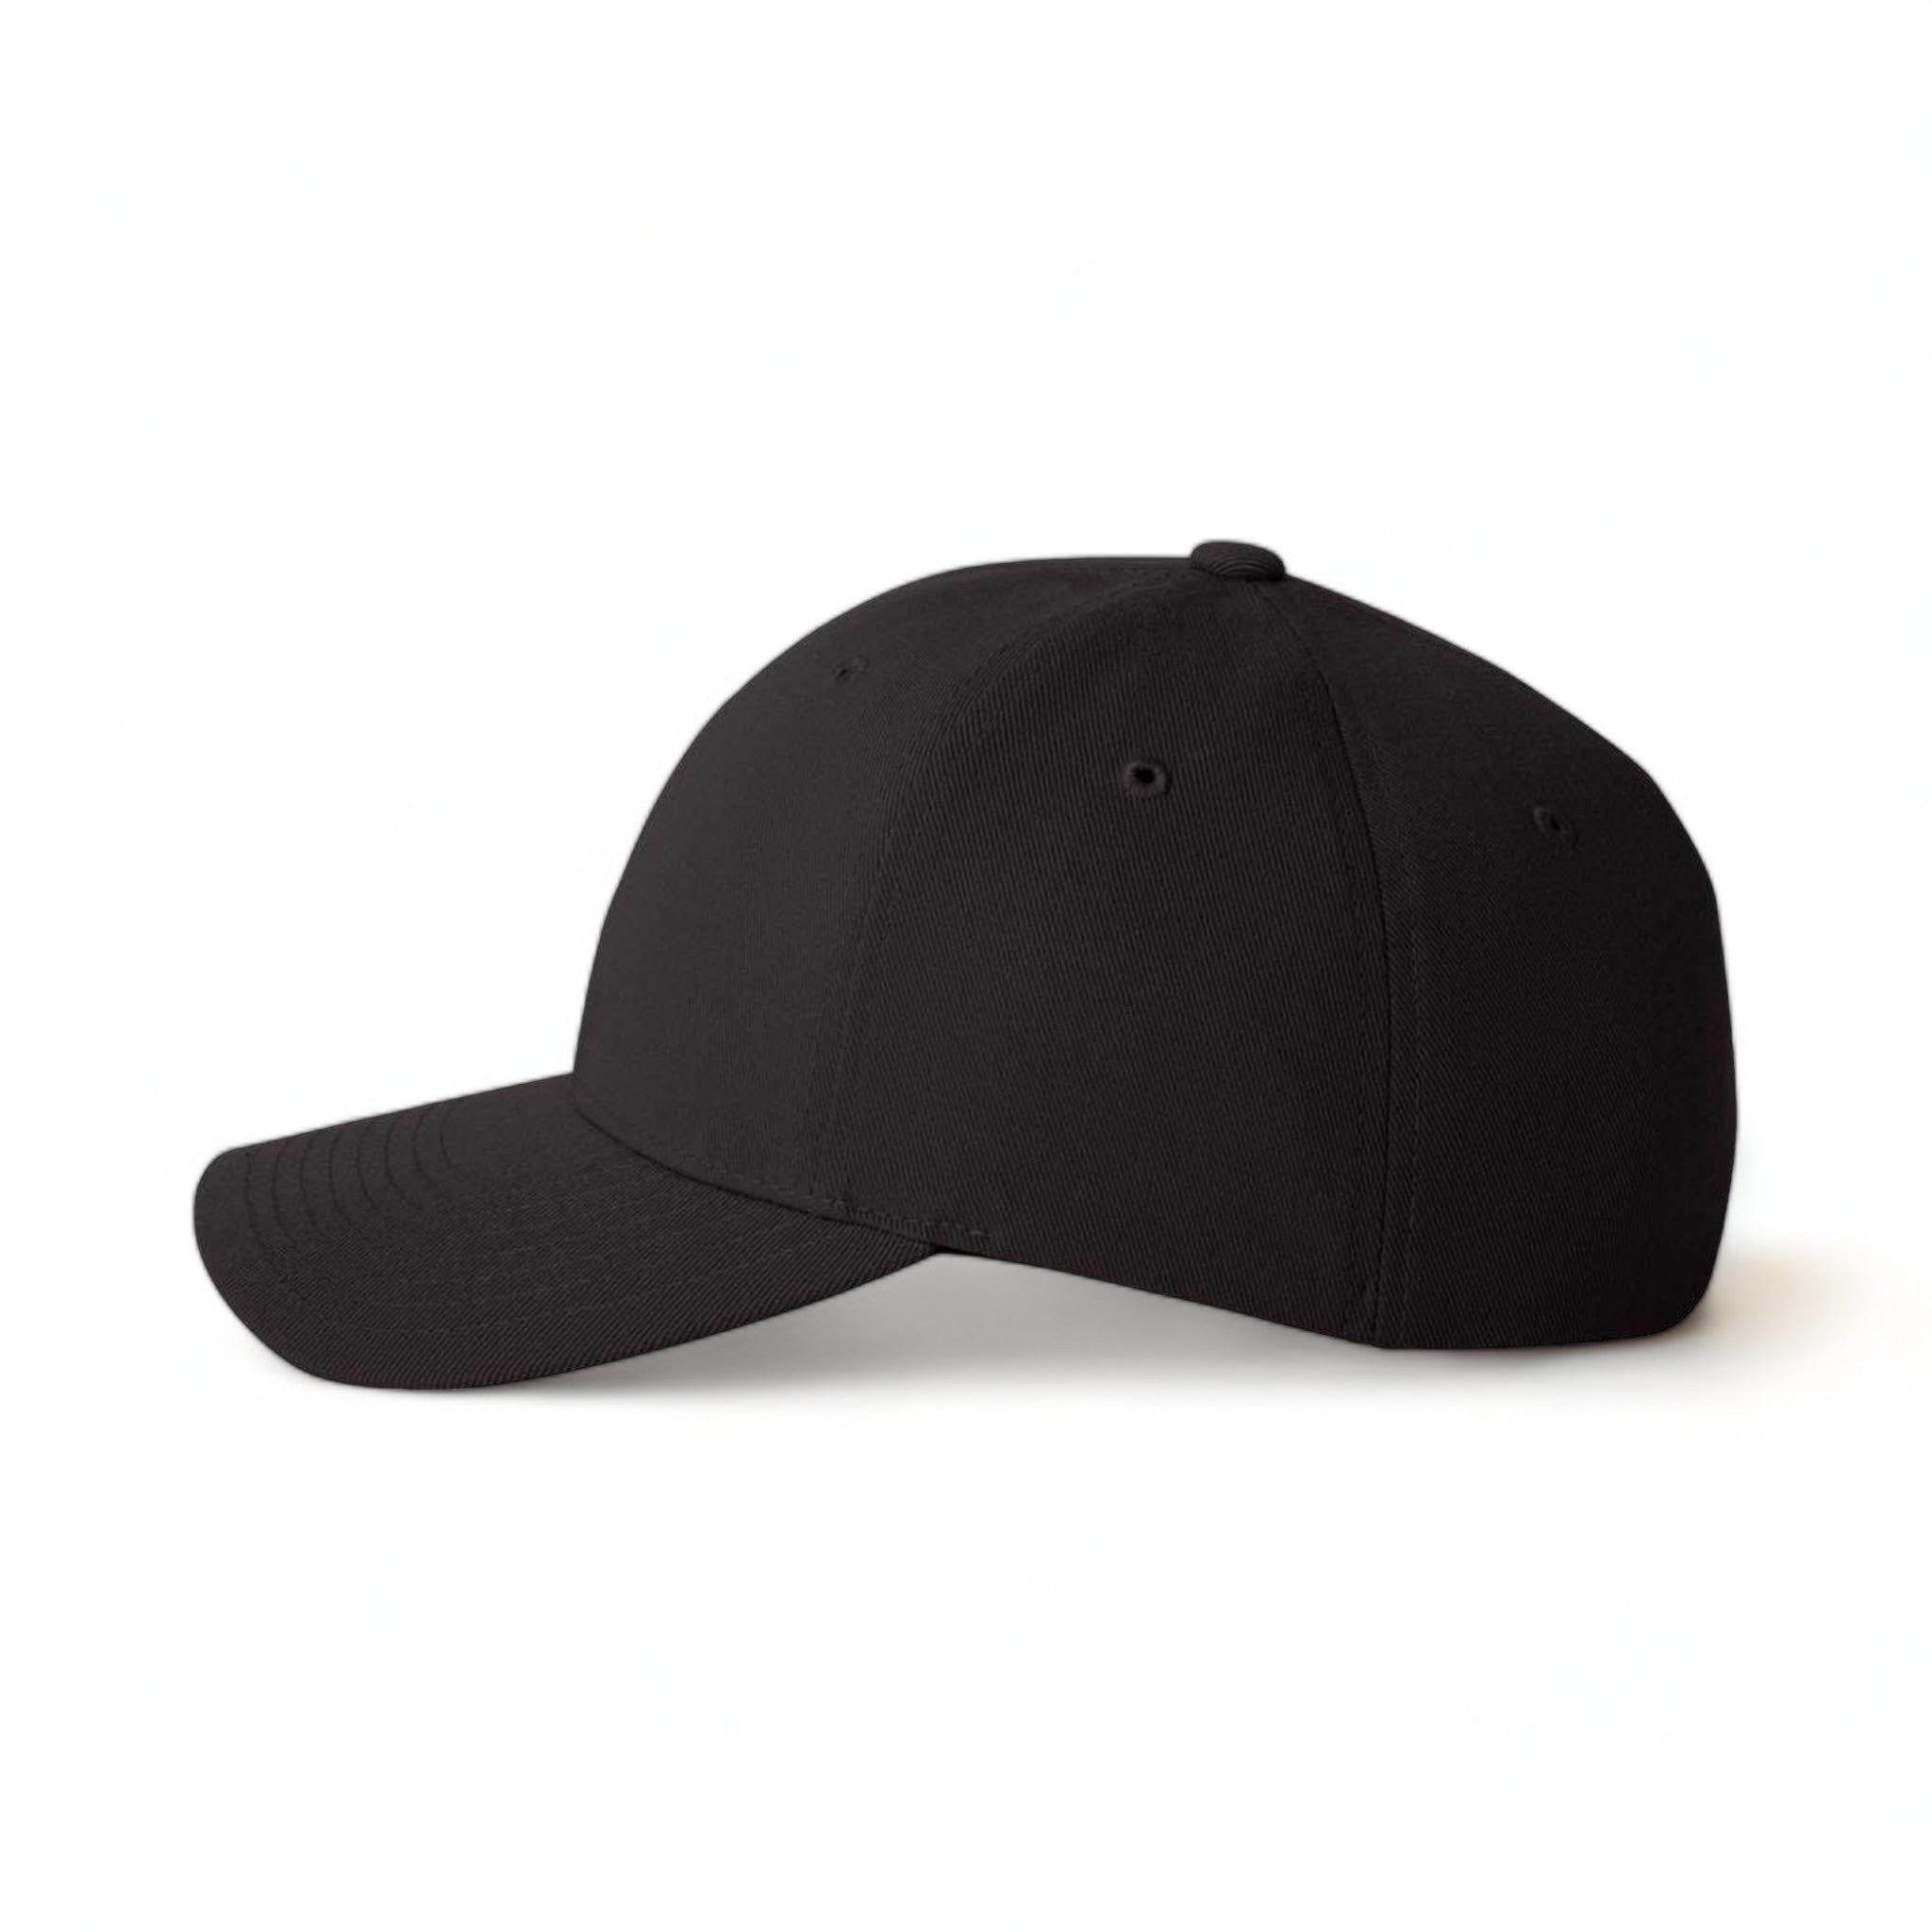 Side view of Flexfit 6580 custom hat in black